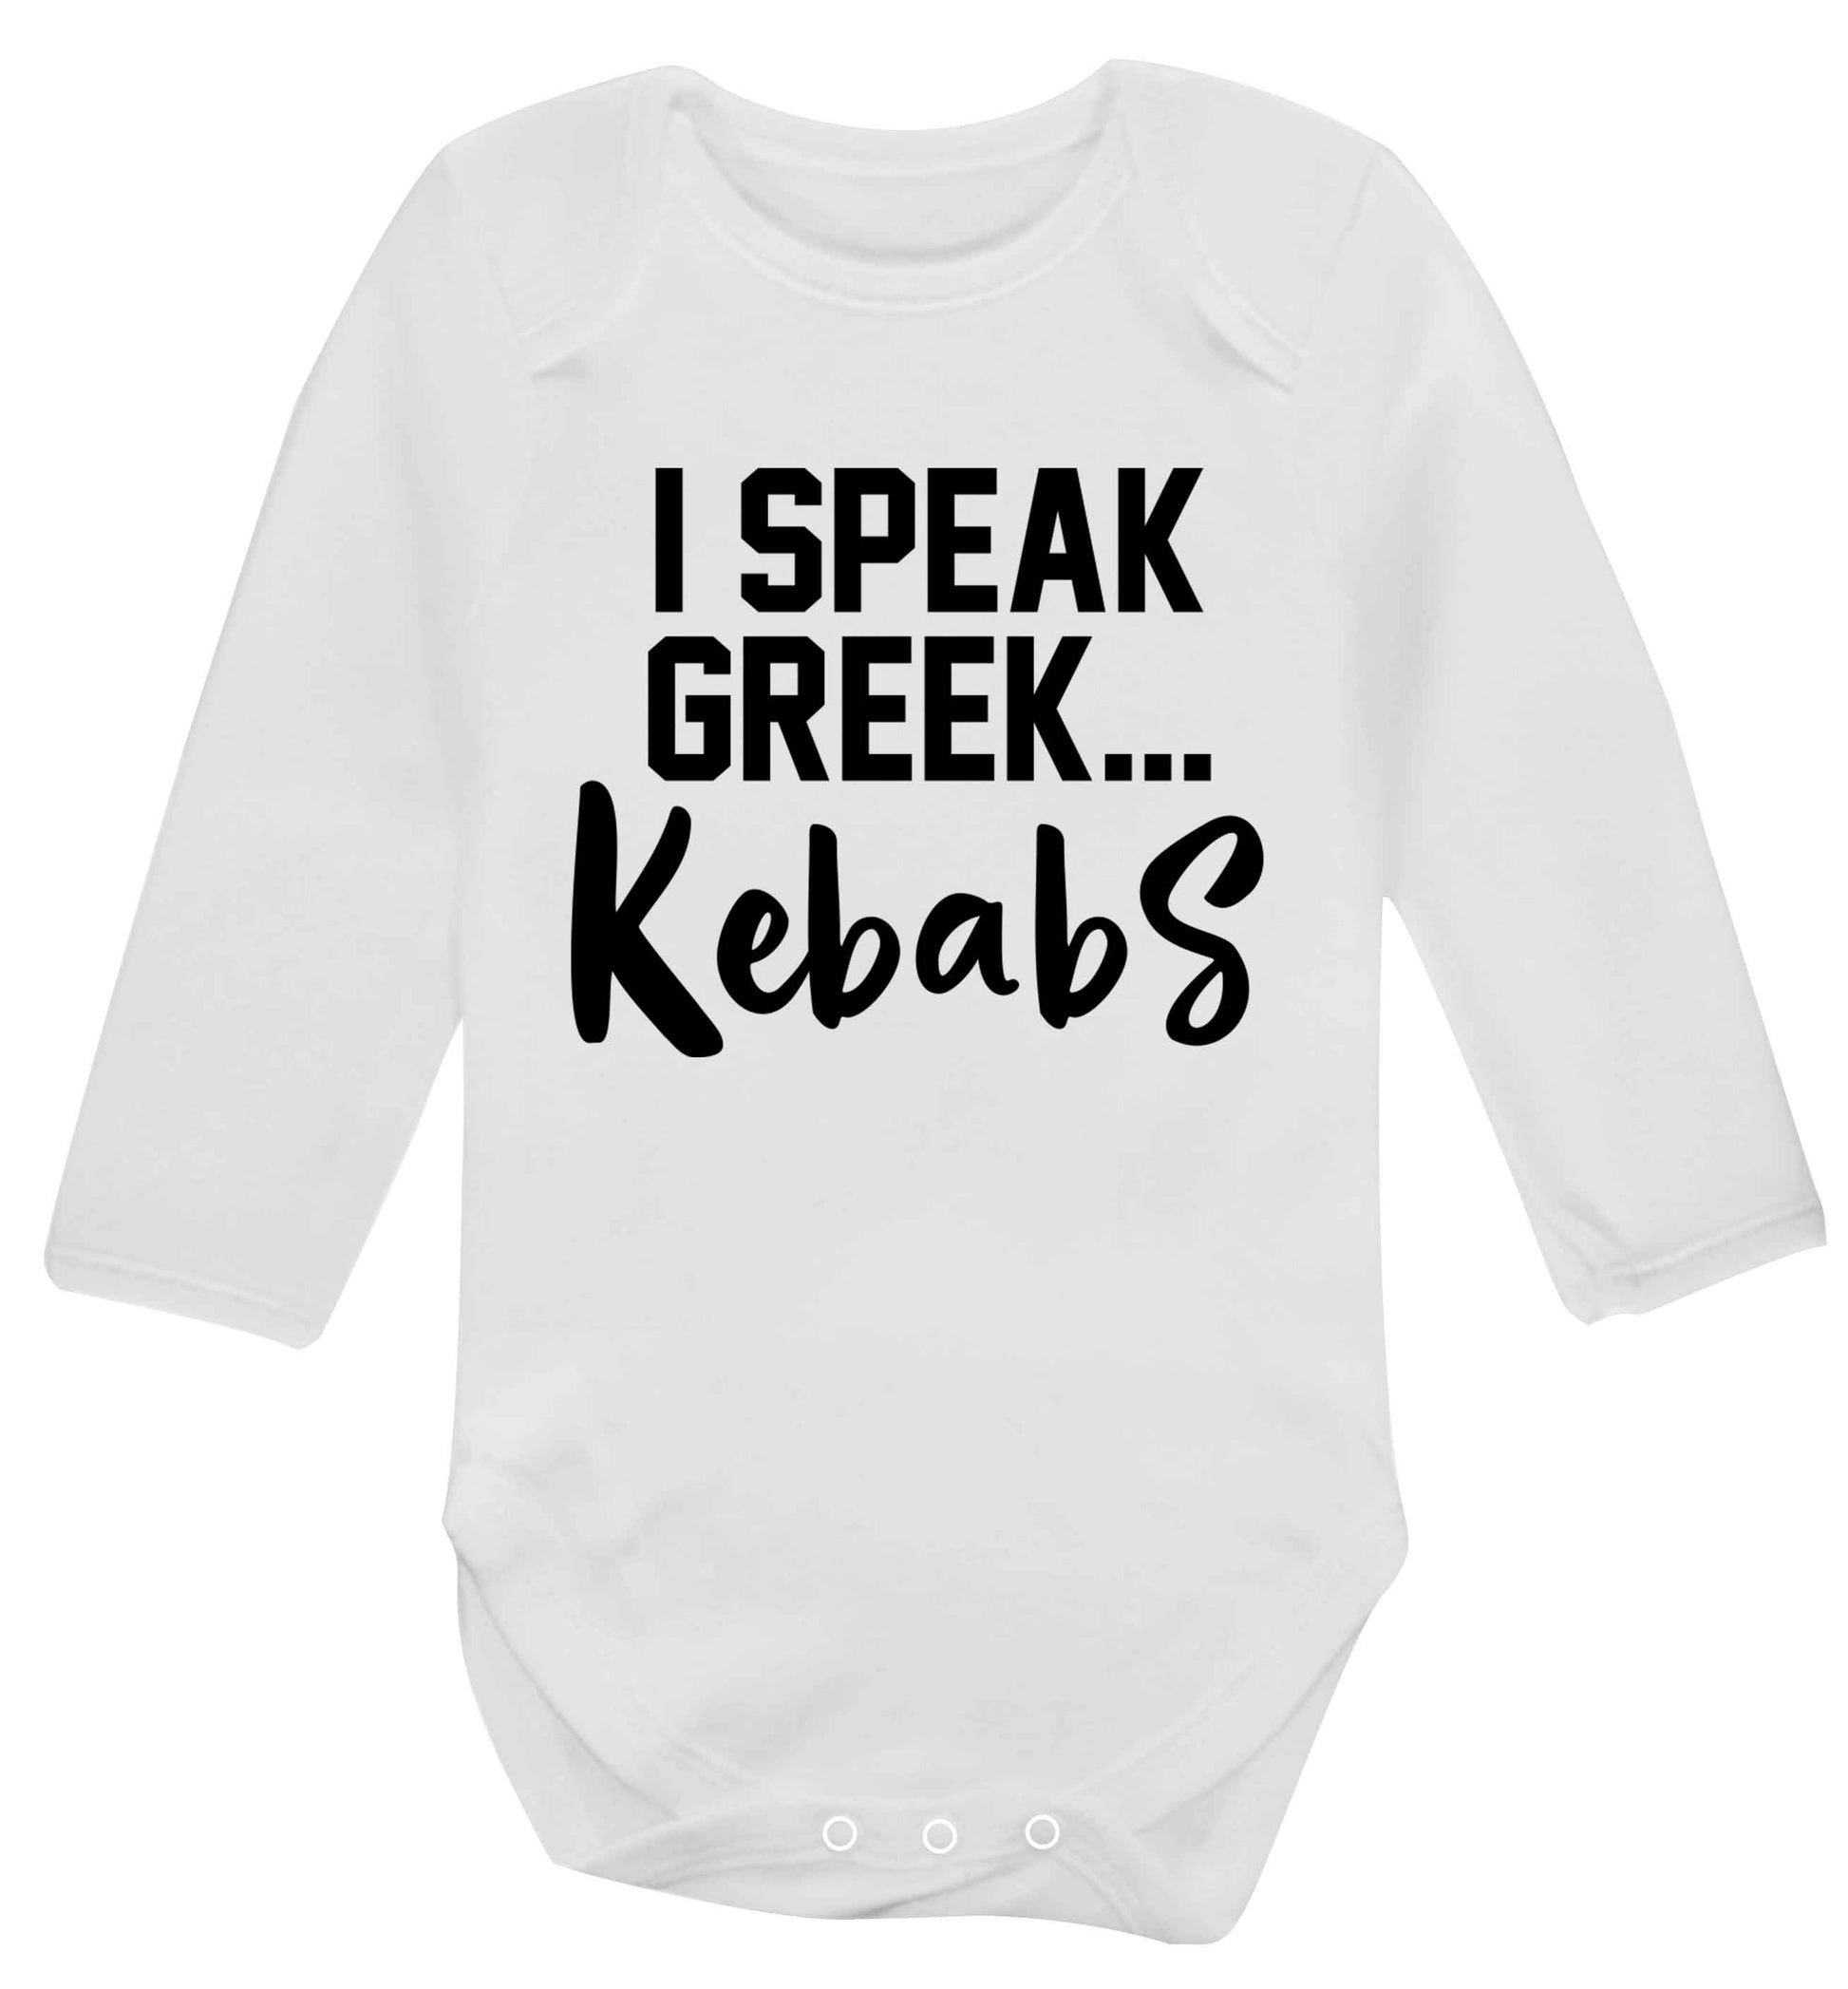 I speak Greek...kebabs Baby Vest long sleeved white 6-12 months